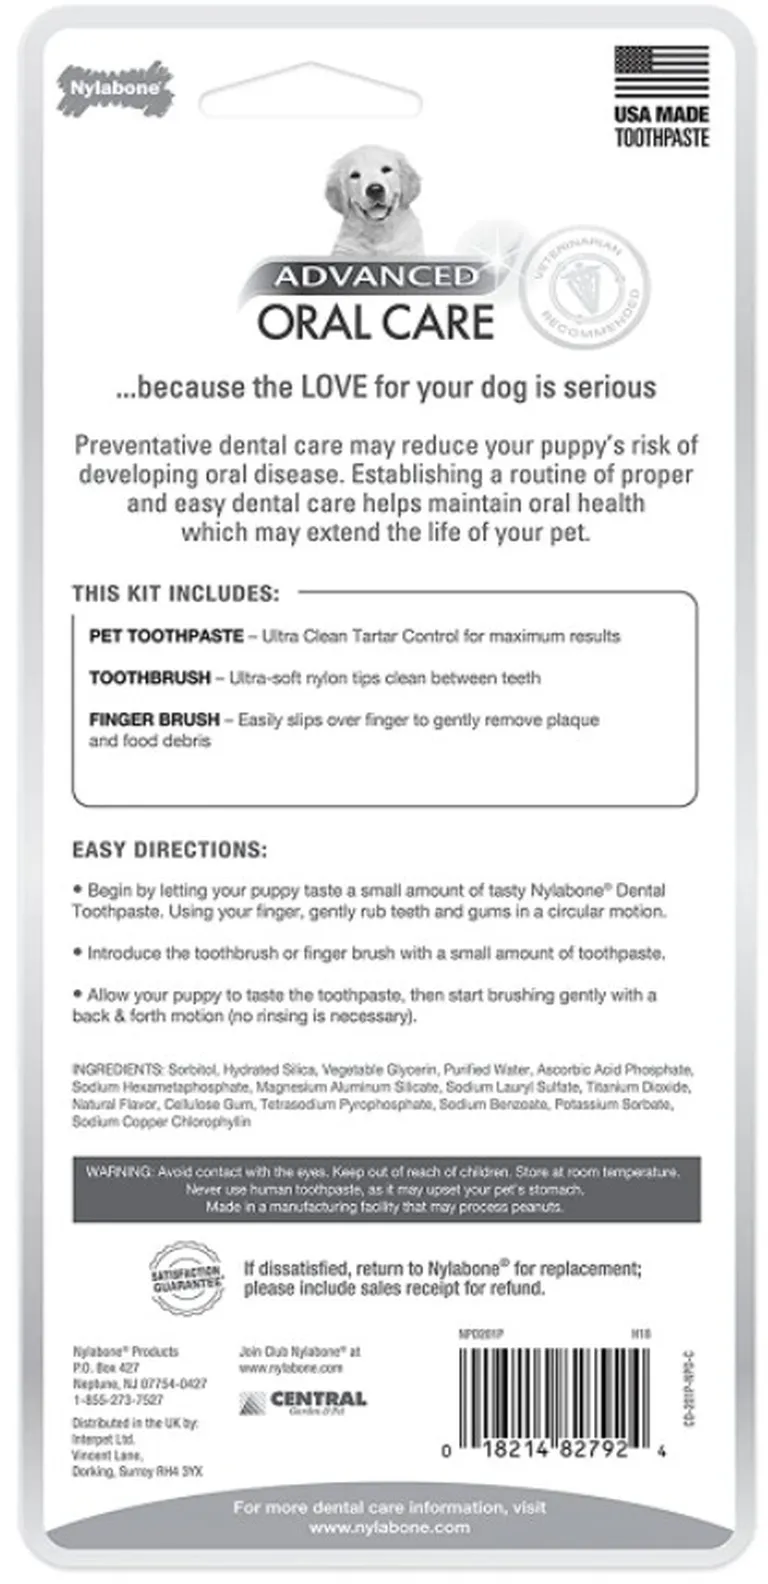 Nylabone Advanced Oral Care Puppy Dental Kit Photo 2